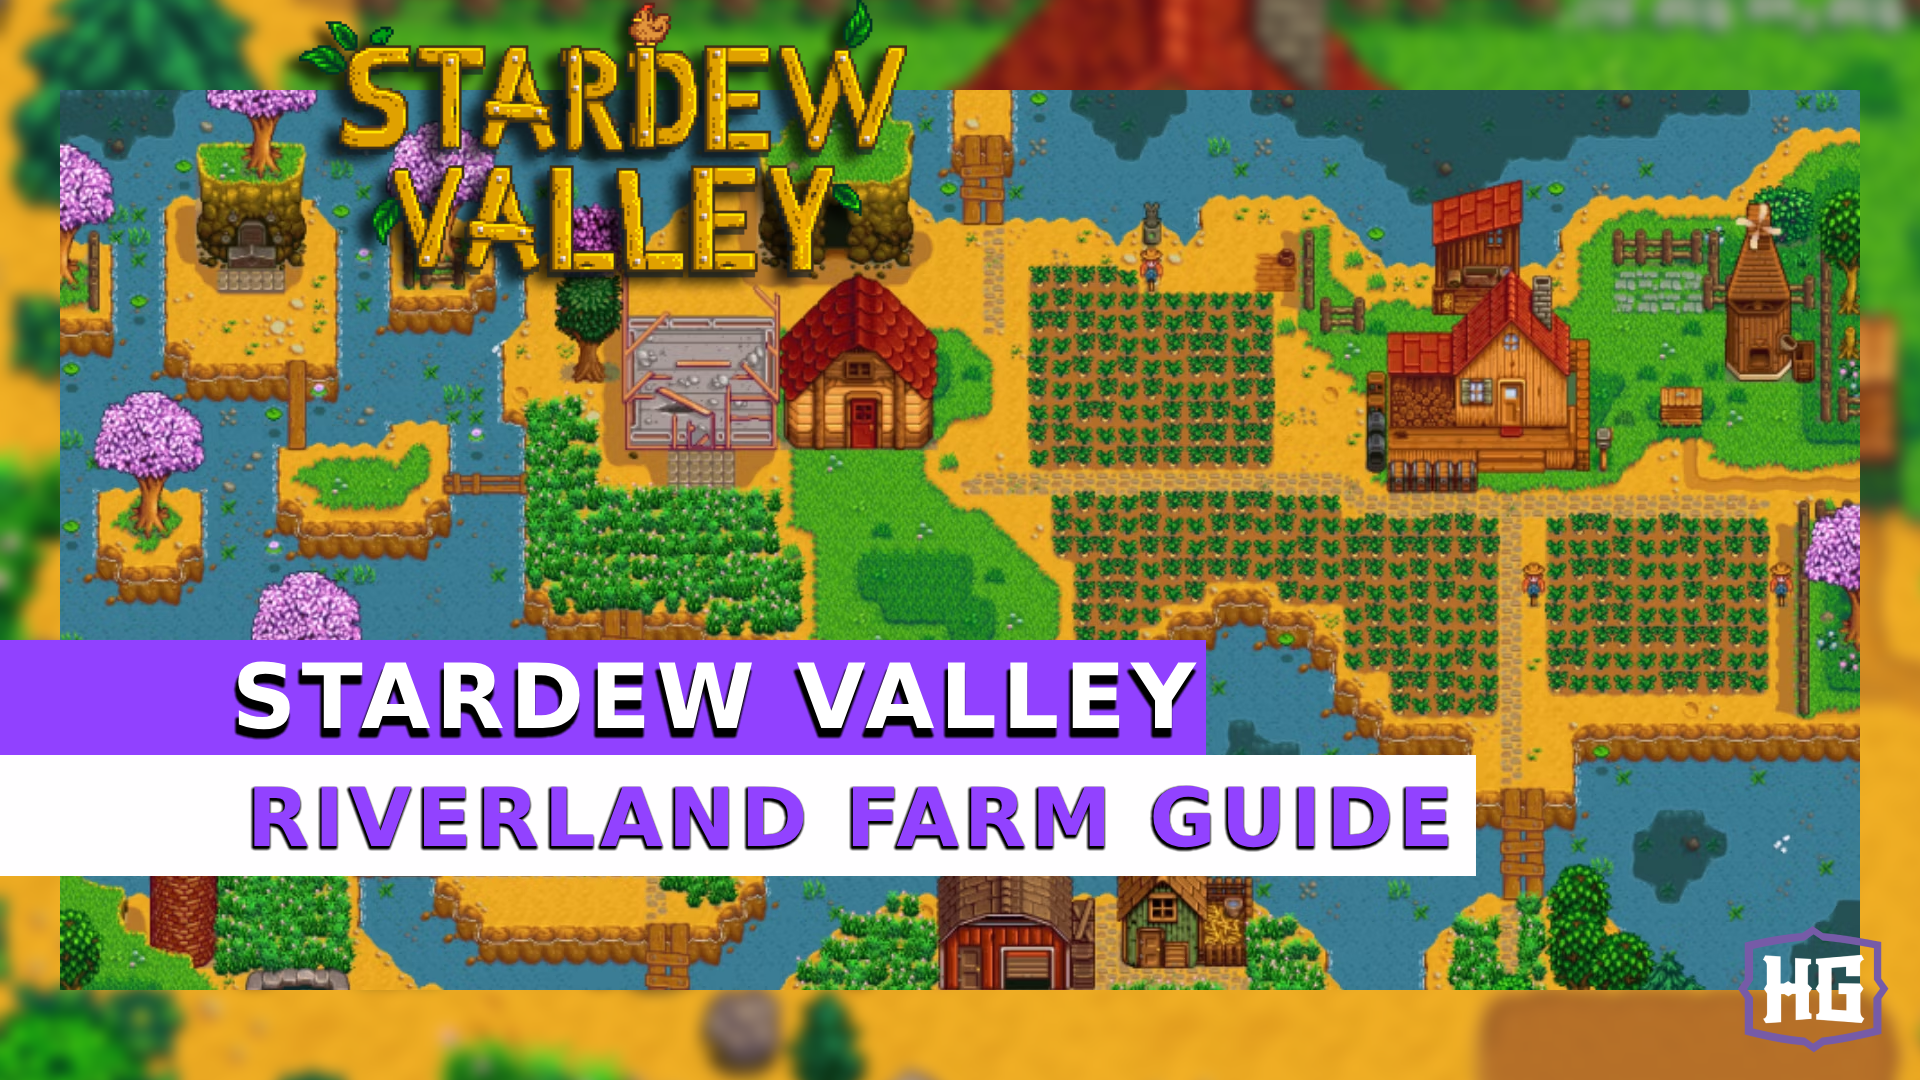 Stardew Valley: Riverland Farm Guide